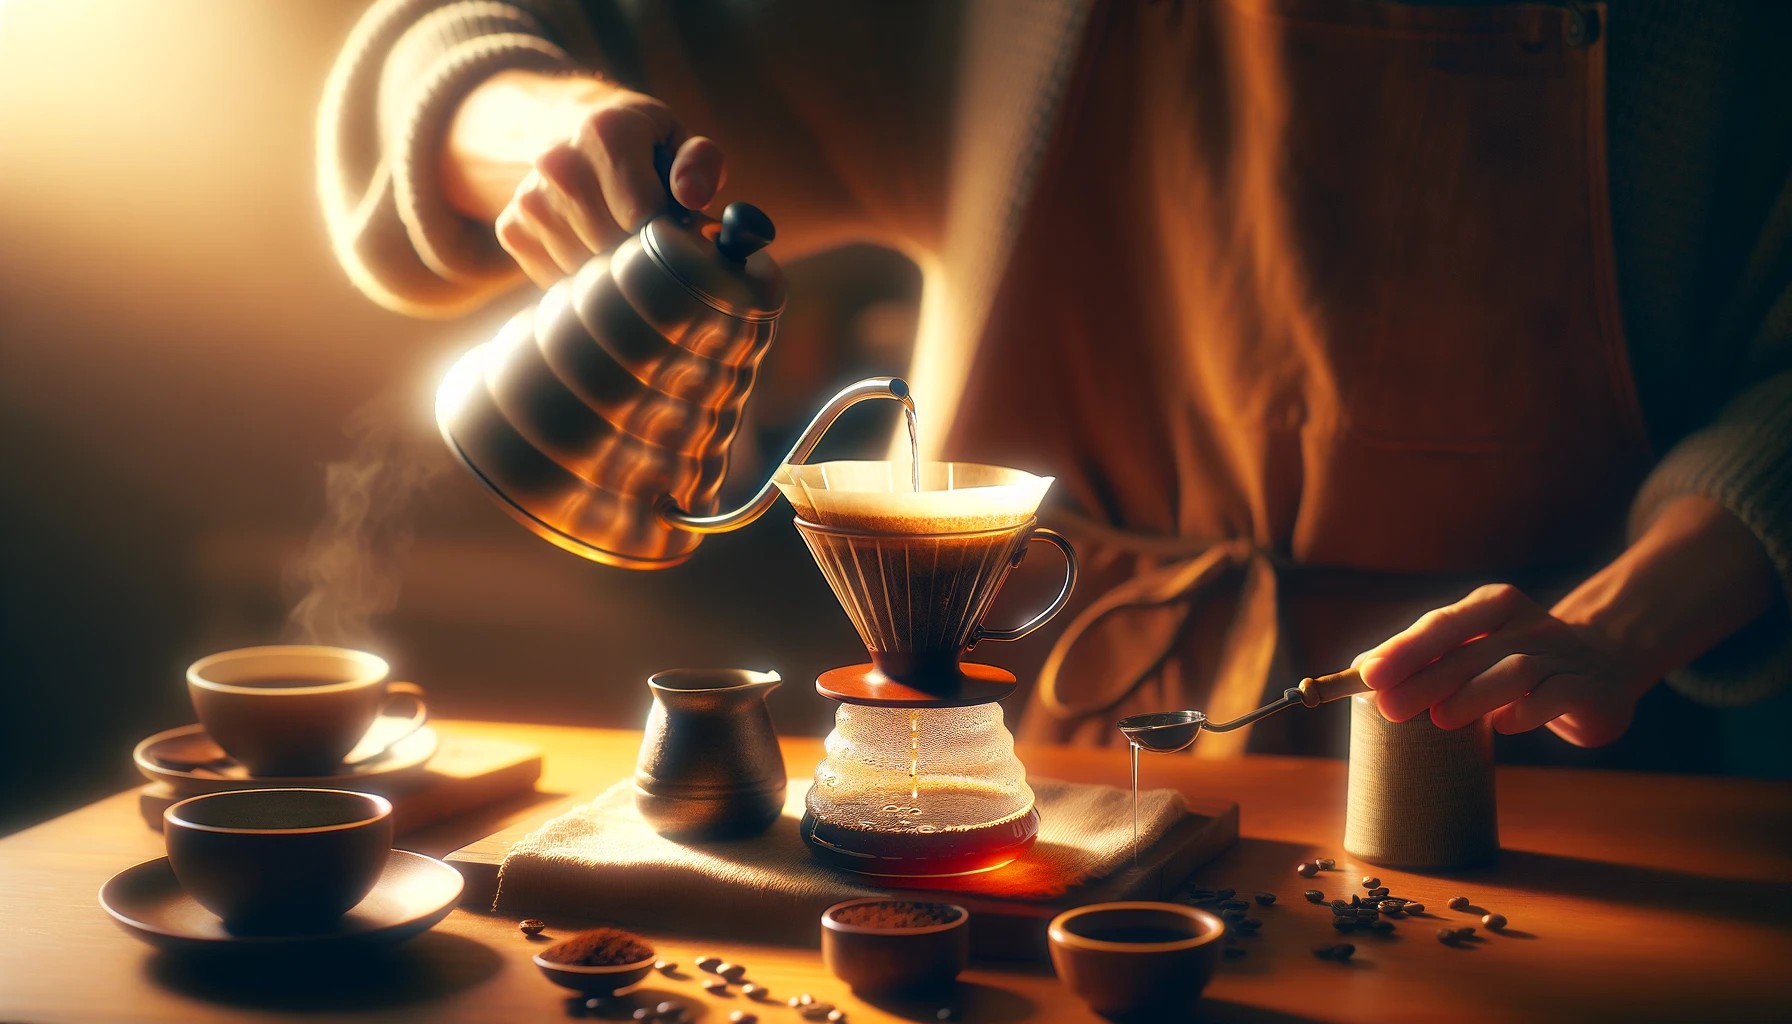 分析咖啡 沖煮技巧 手沖咖啡 杯測 餘韻 水洗 日曬 蜜處理 Analyzing Coffee Brewing Techniques Hand-brewed Coffee Cupping Finish Washing Sun-drying Honey Processing